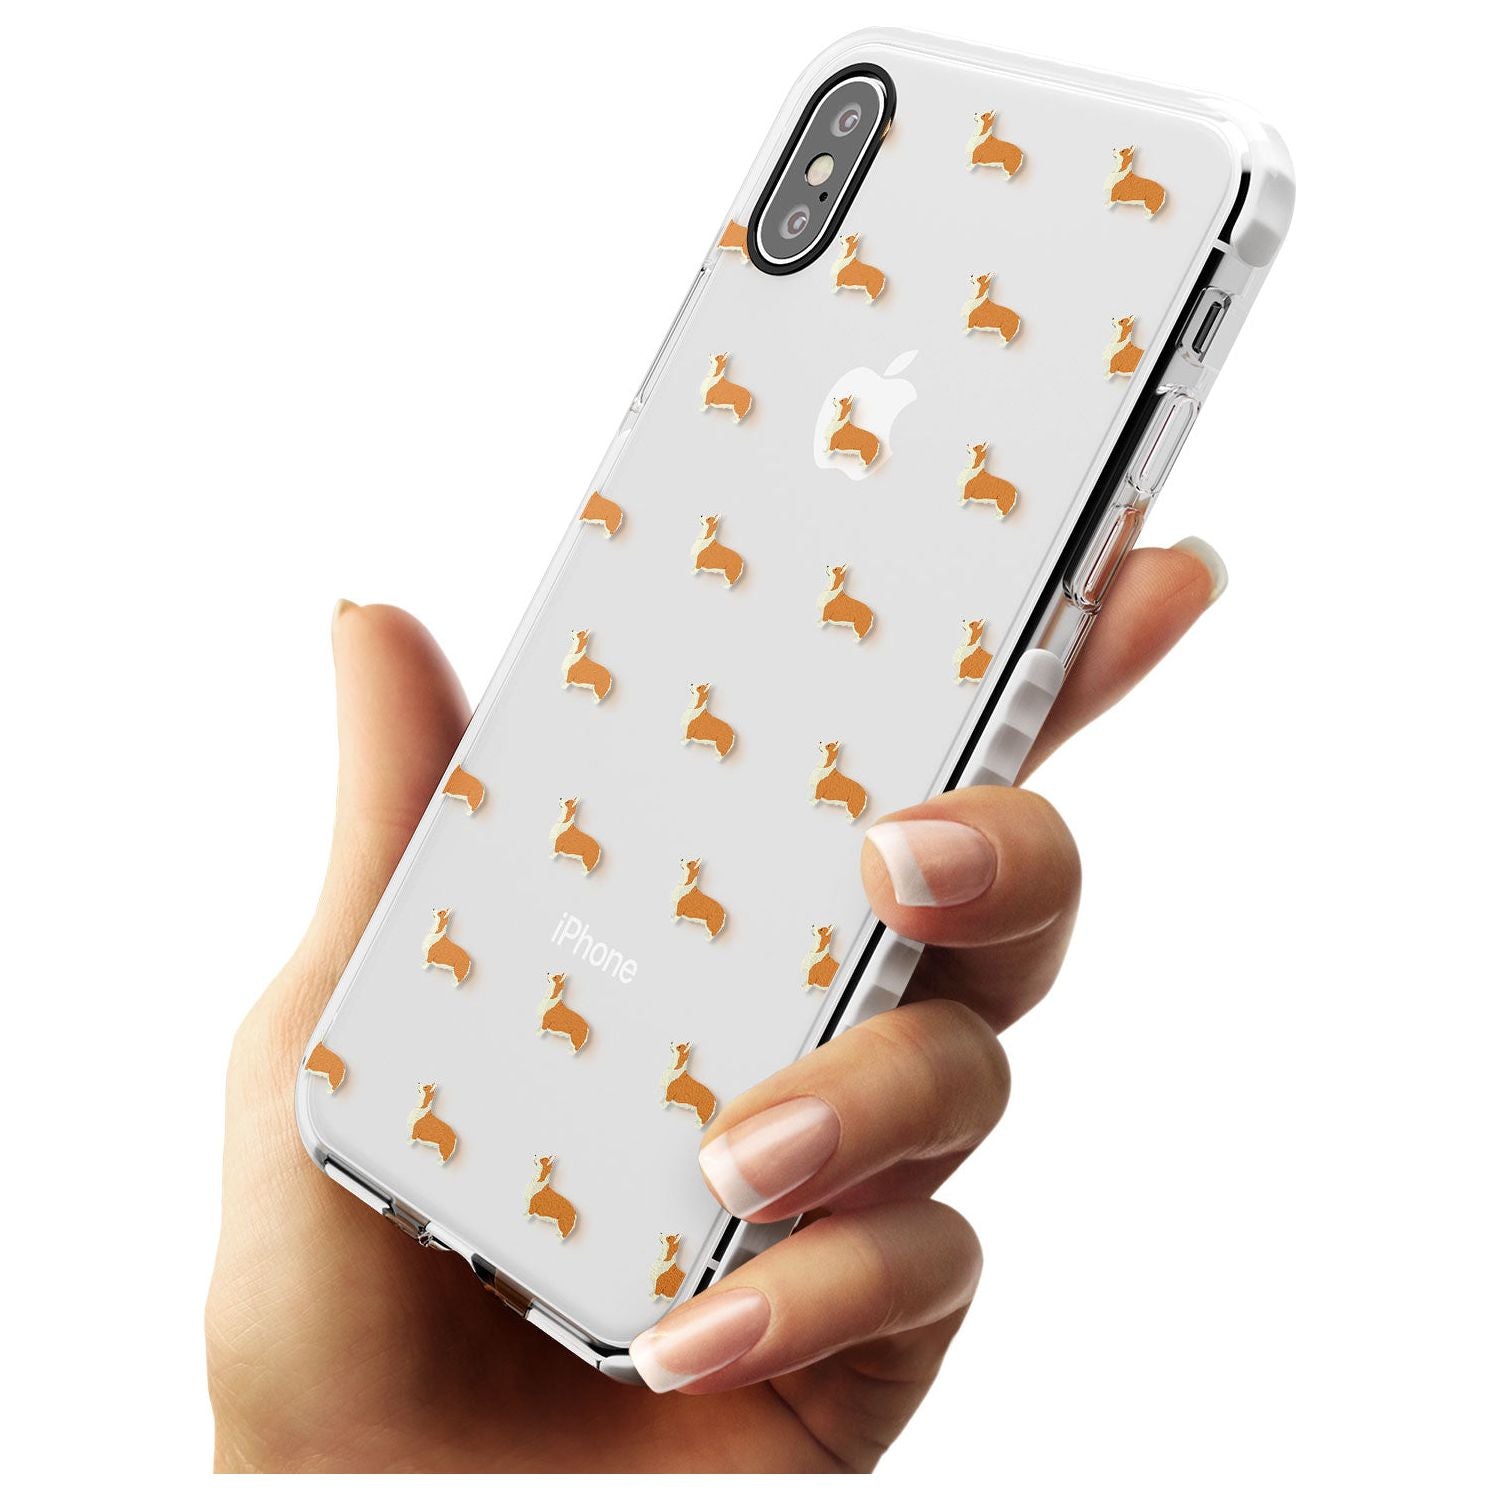 Pembroke Welsh Corgi Dog Pattern Clear Impact Phone Case for iPhone X XS Max XR